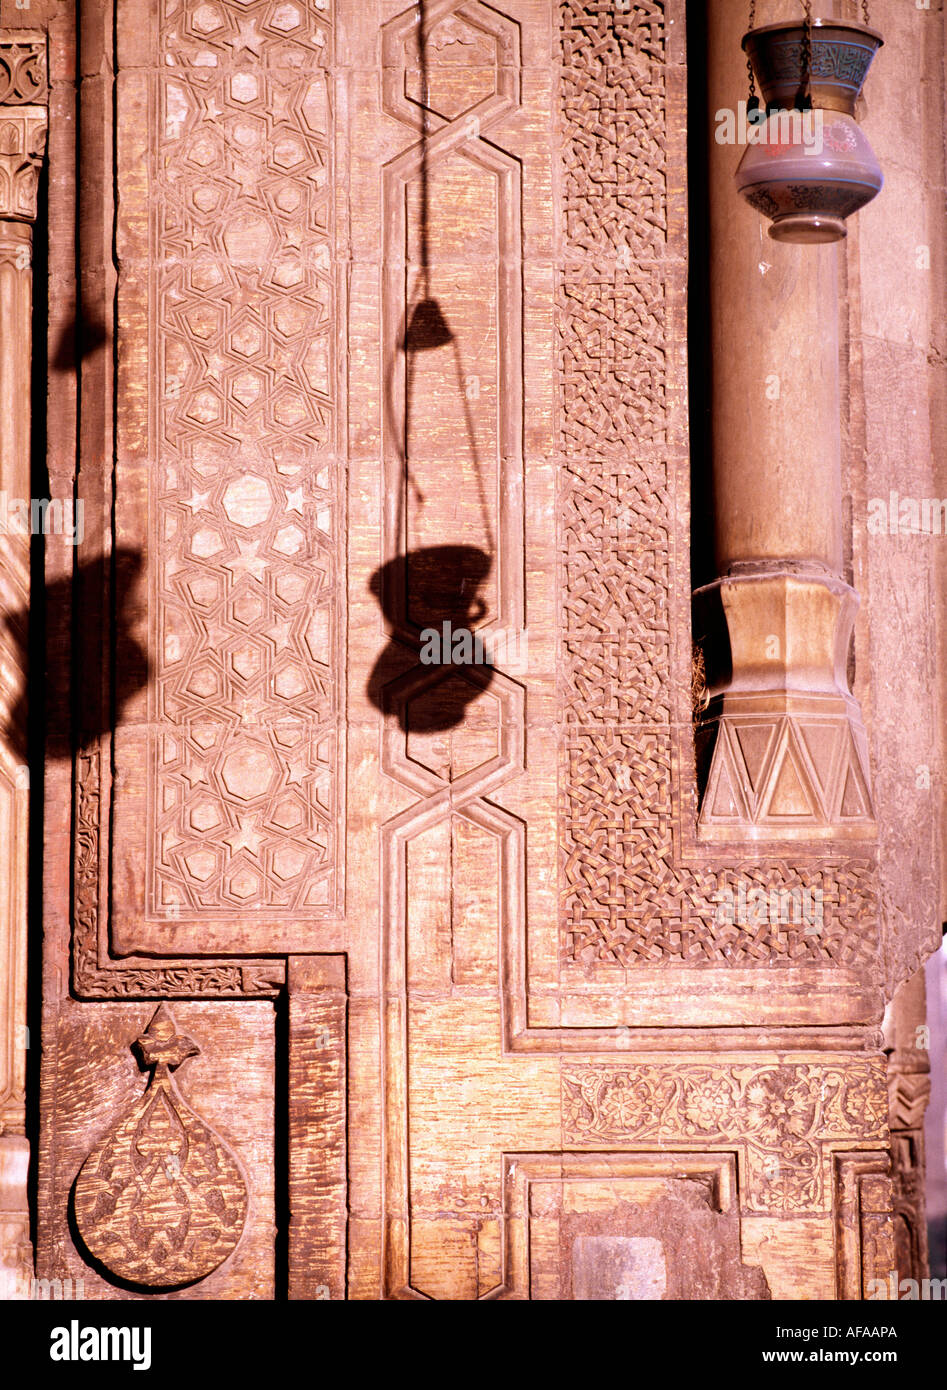 Sultan Hasan complex, Cairo, detail of entrance portal Stock Photo